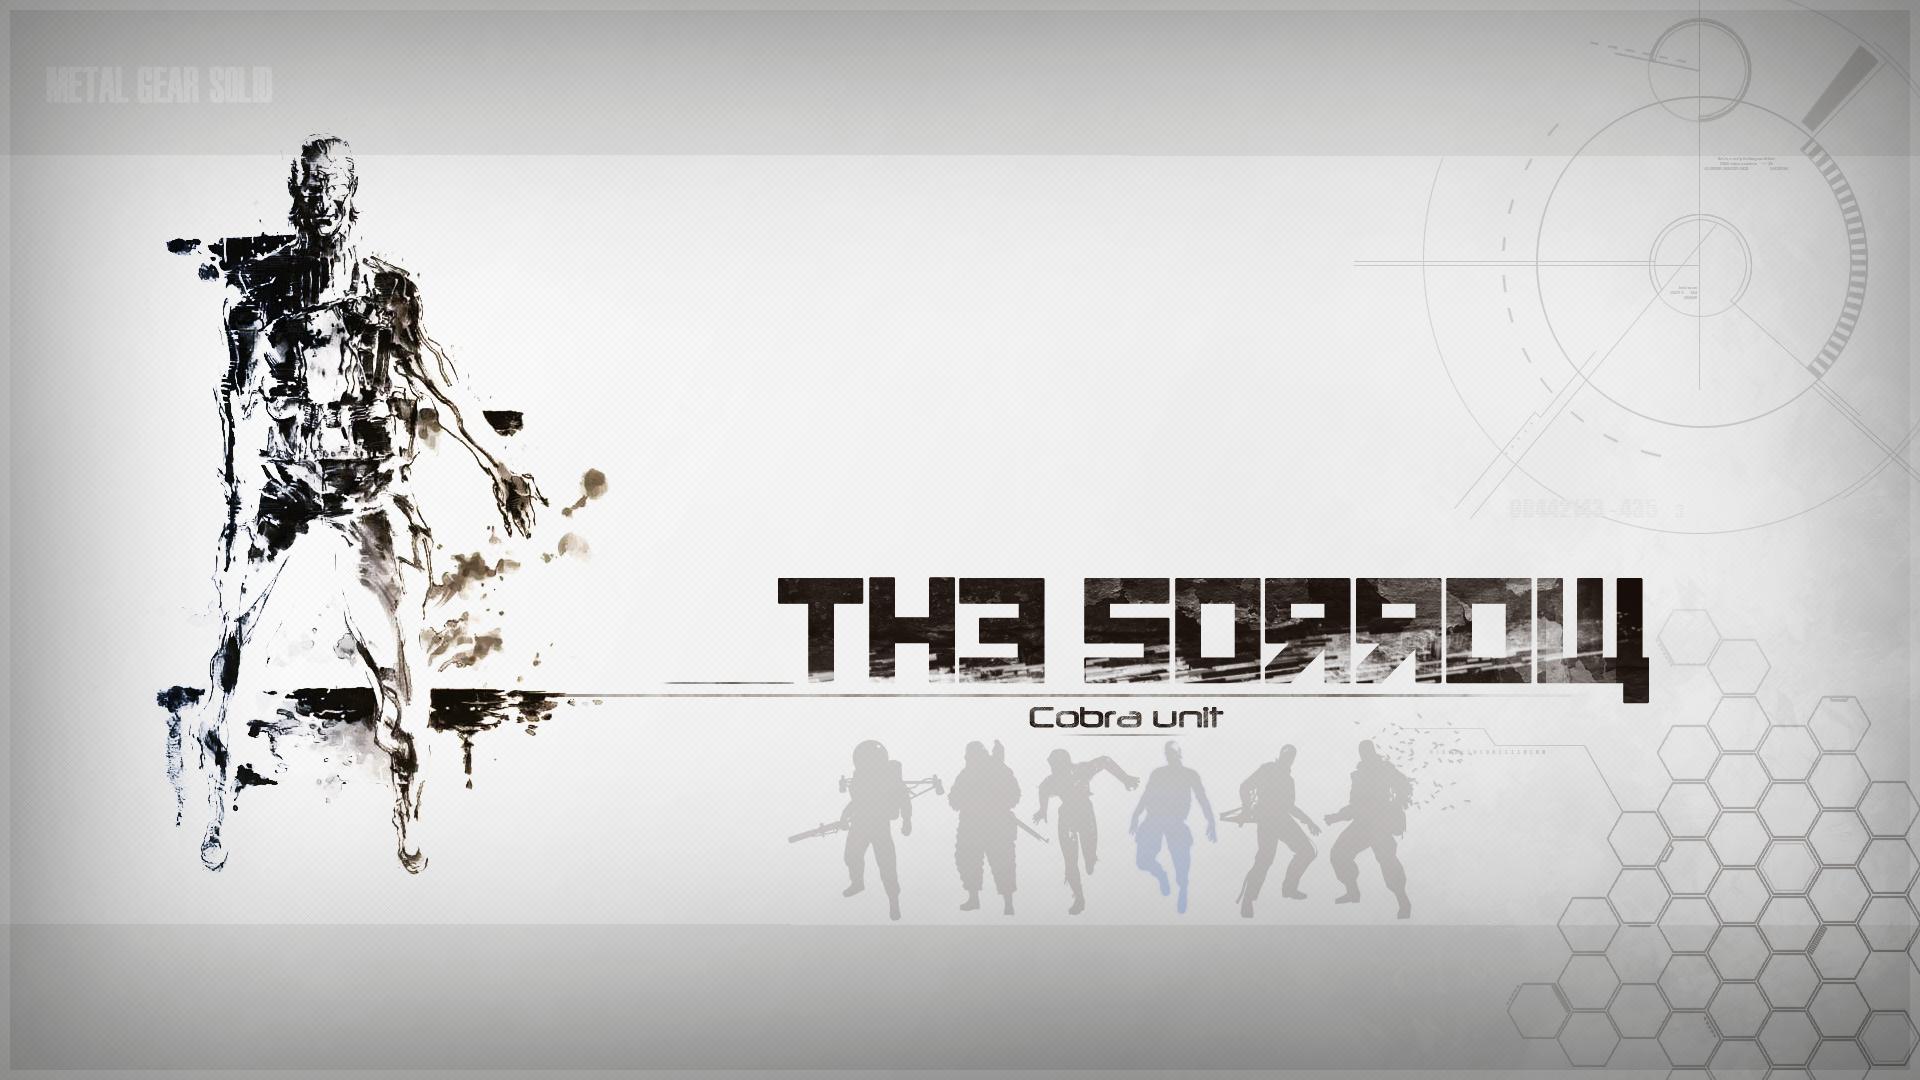 The Sorrow Is the "Spirit Medium Soldier" of the Cobra Unit. by Yoji Shinkawa